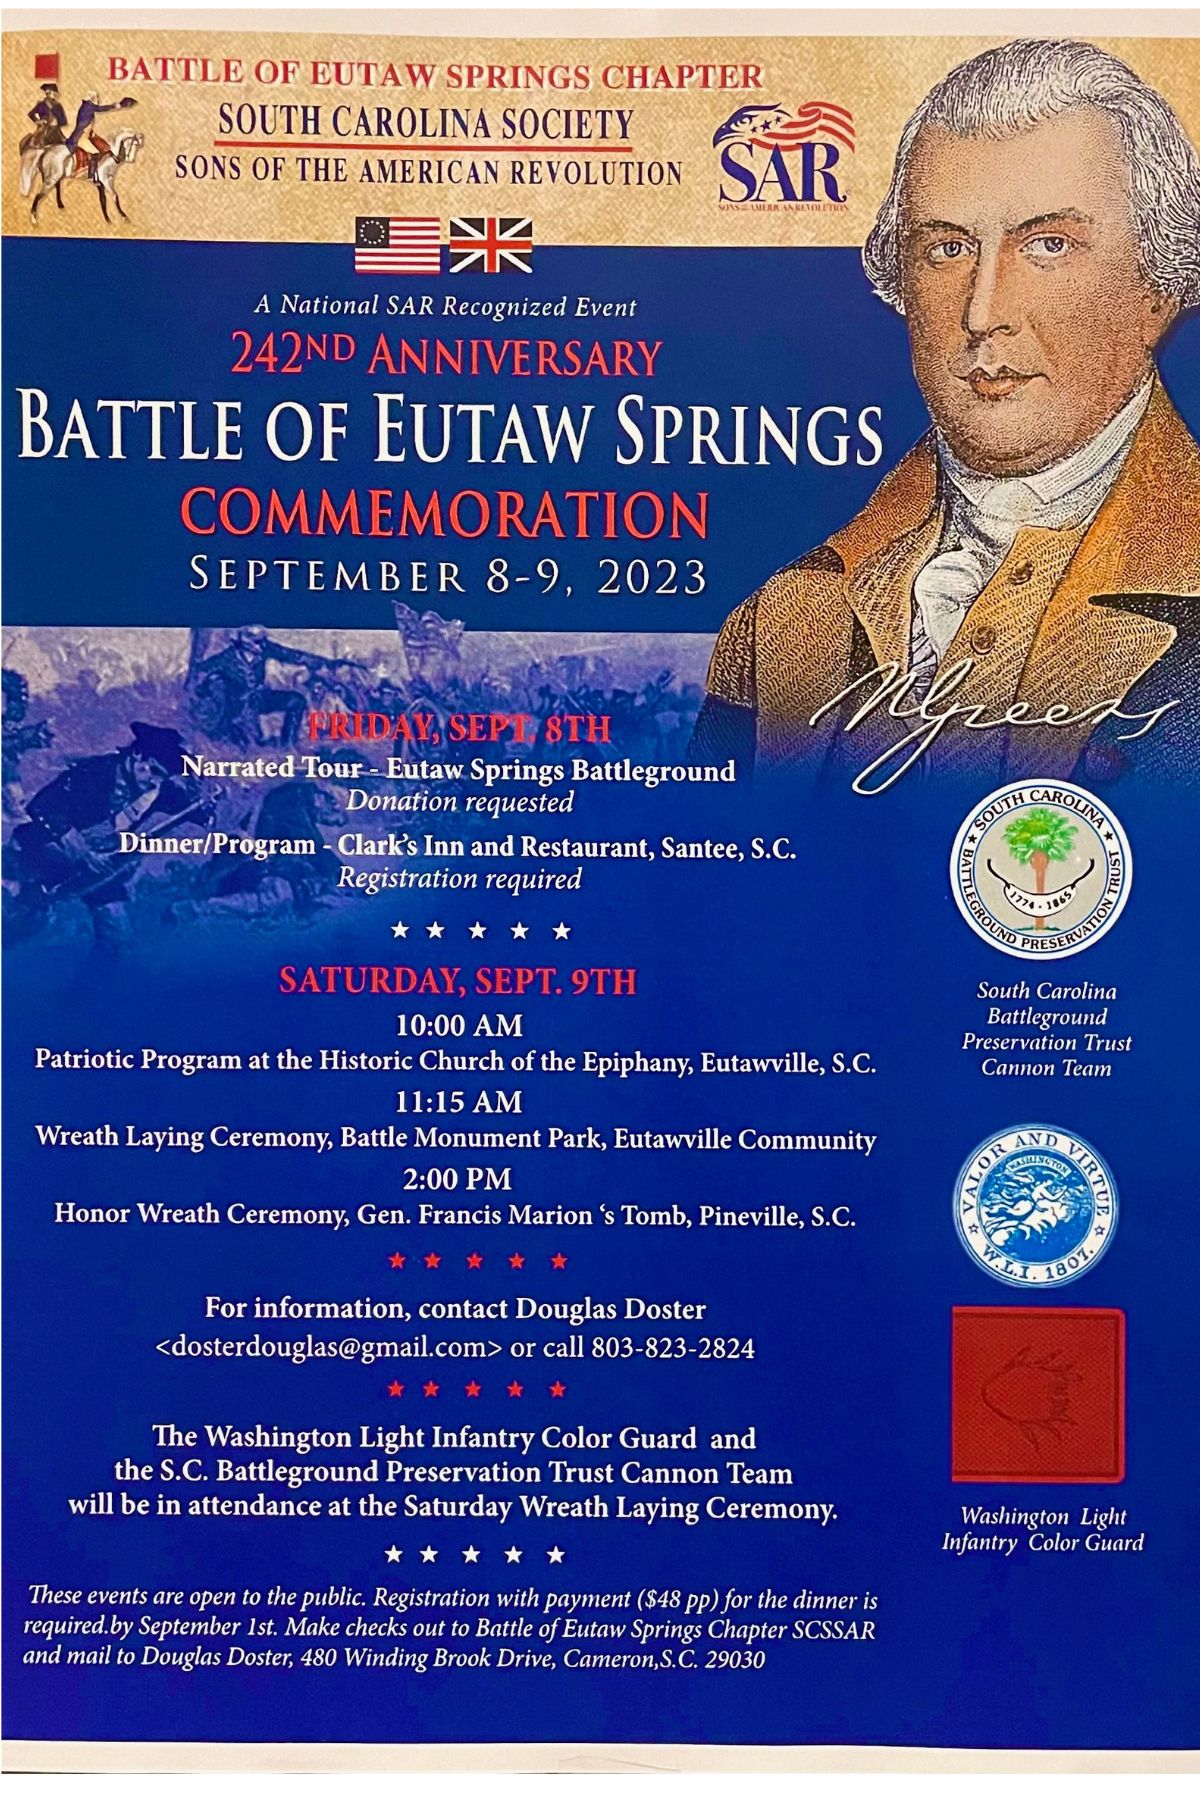 Battle of Eutaw Springs 5 7 in 5 6 in 4 6 in 4 6 in